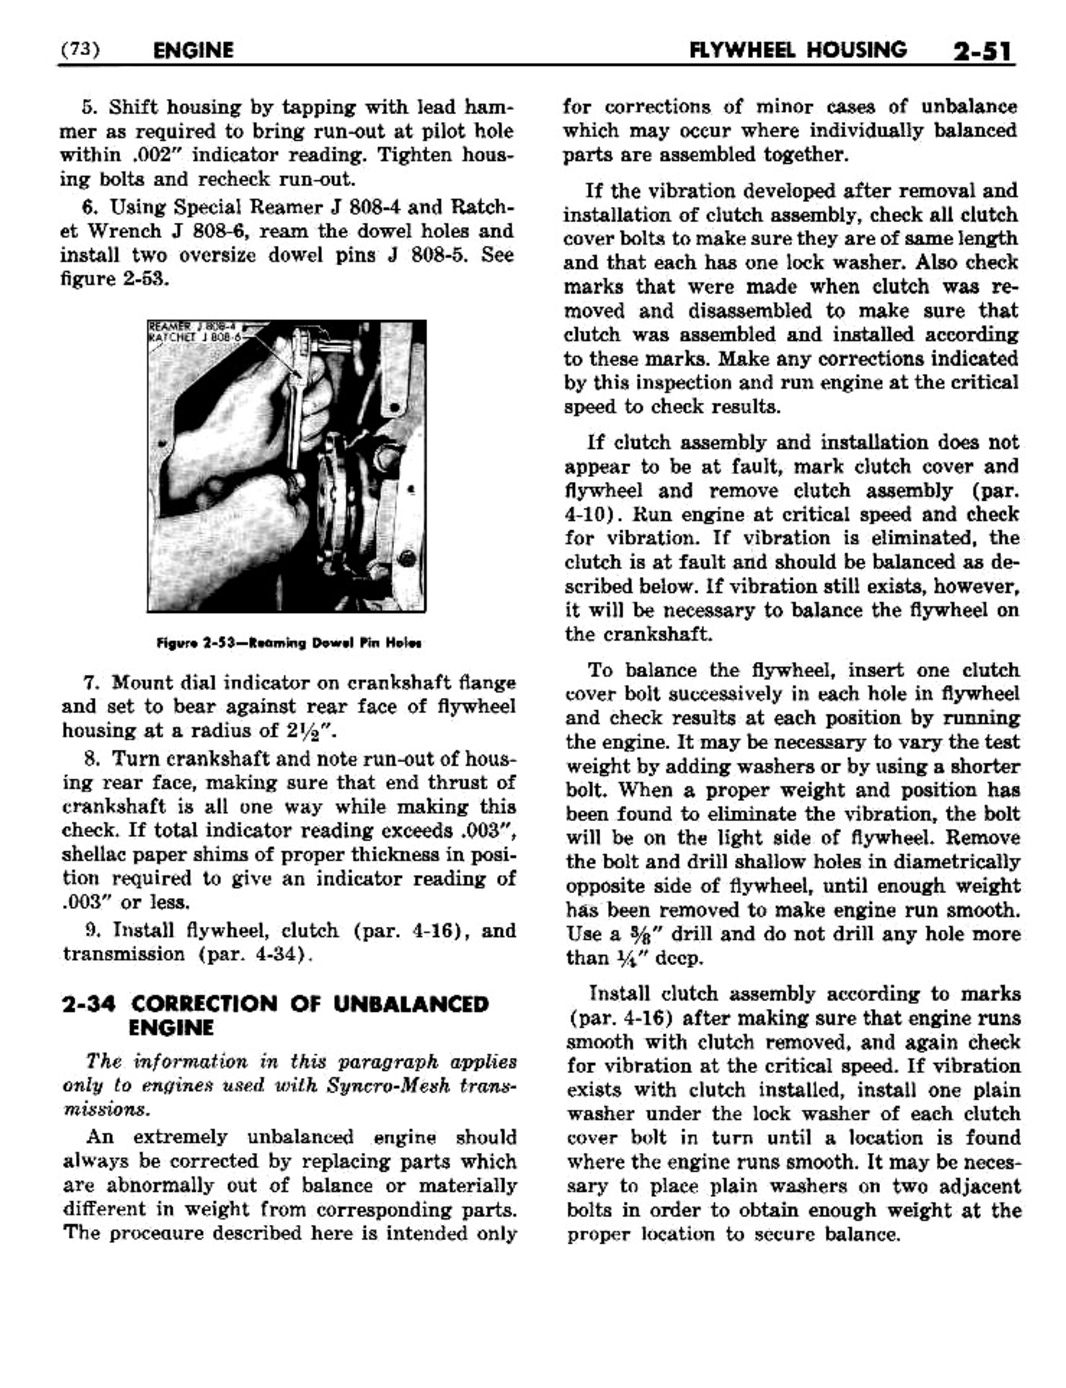 n_03 1948 Buick Shop Manual - Engine-051-051.jpg